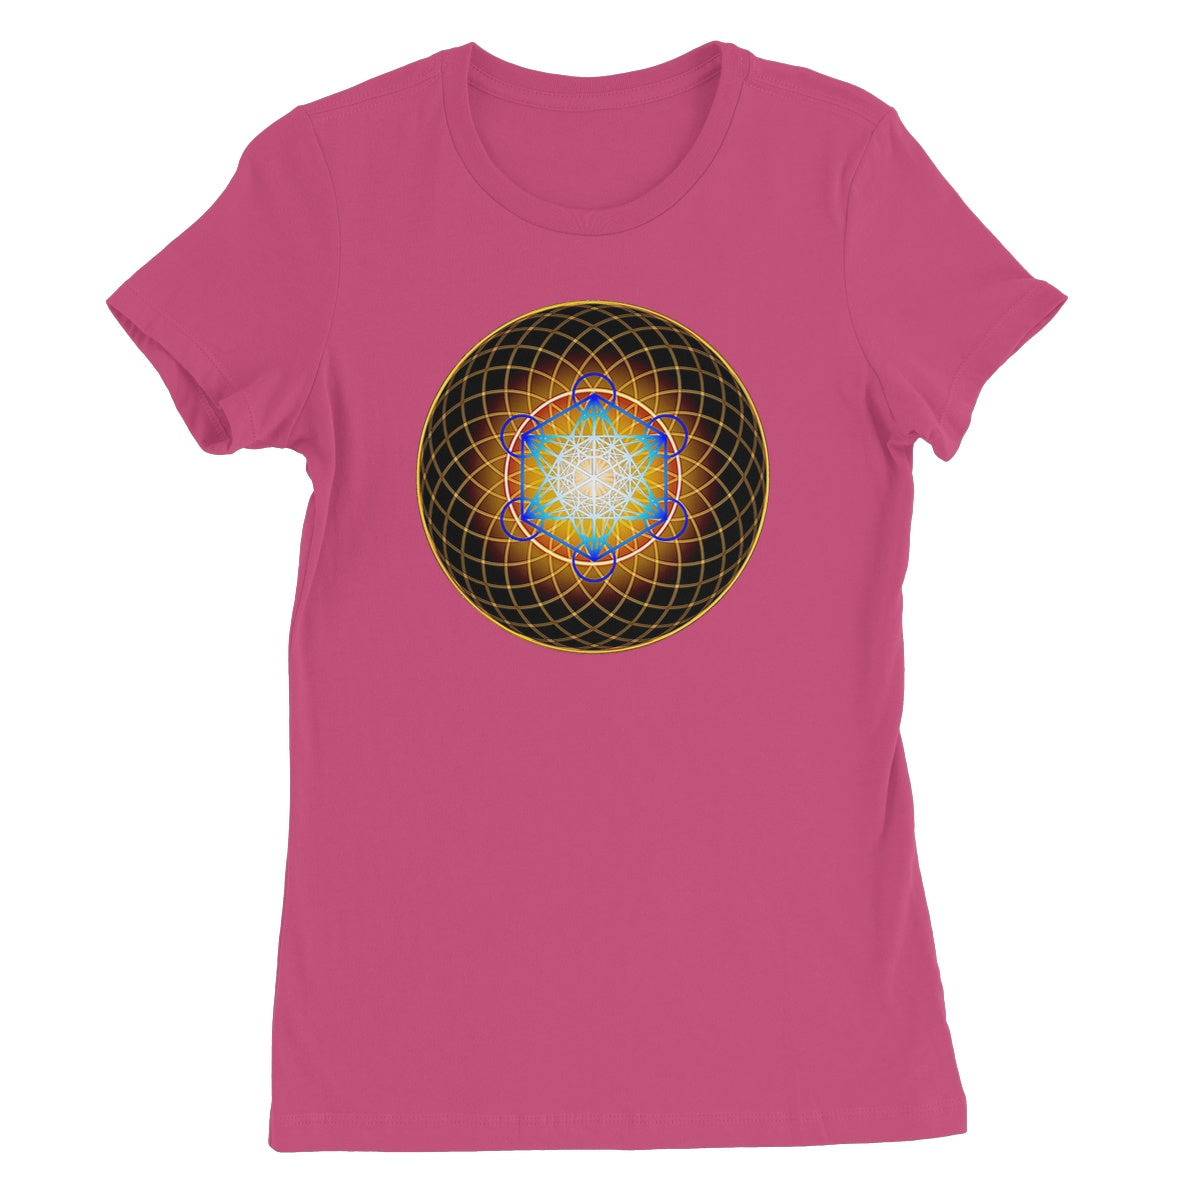 Metatron's Cube inside a New Flower of Life Women's Favourite T-Shirt